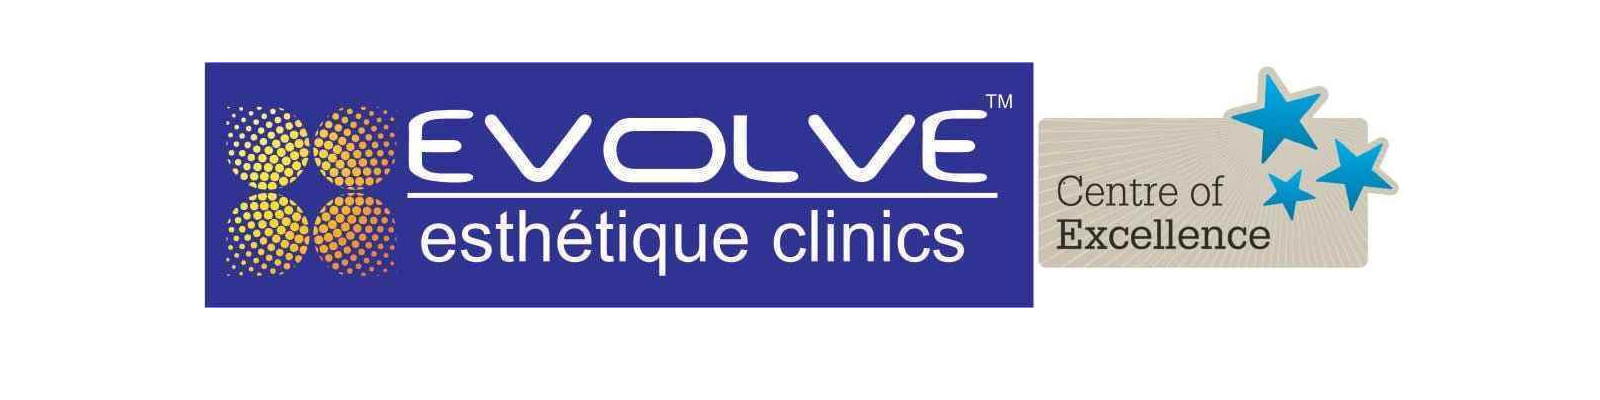 Evolve Esthetique Clinics -Lucknow